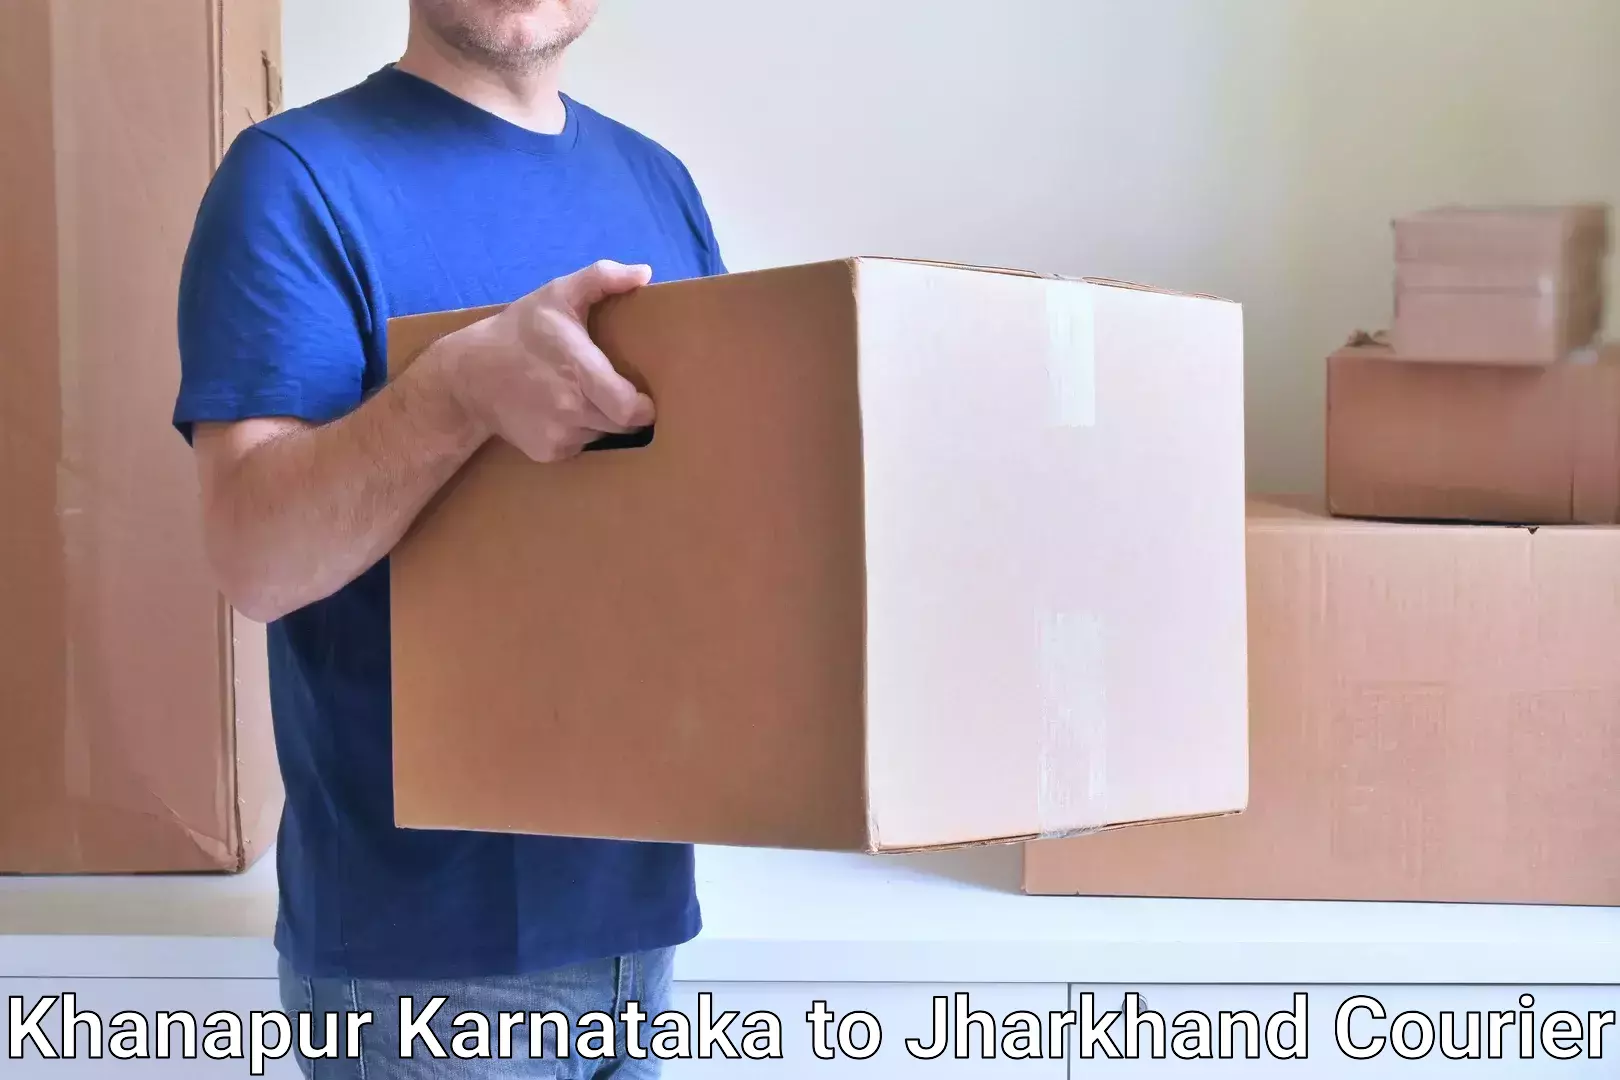 Small parcel delivery Khanapur Karnataka to Dhanbad